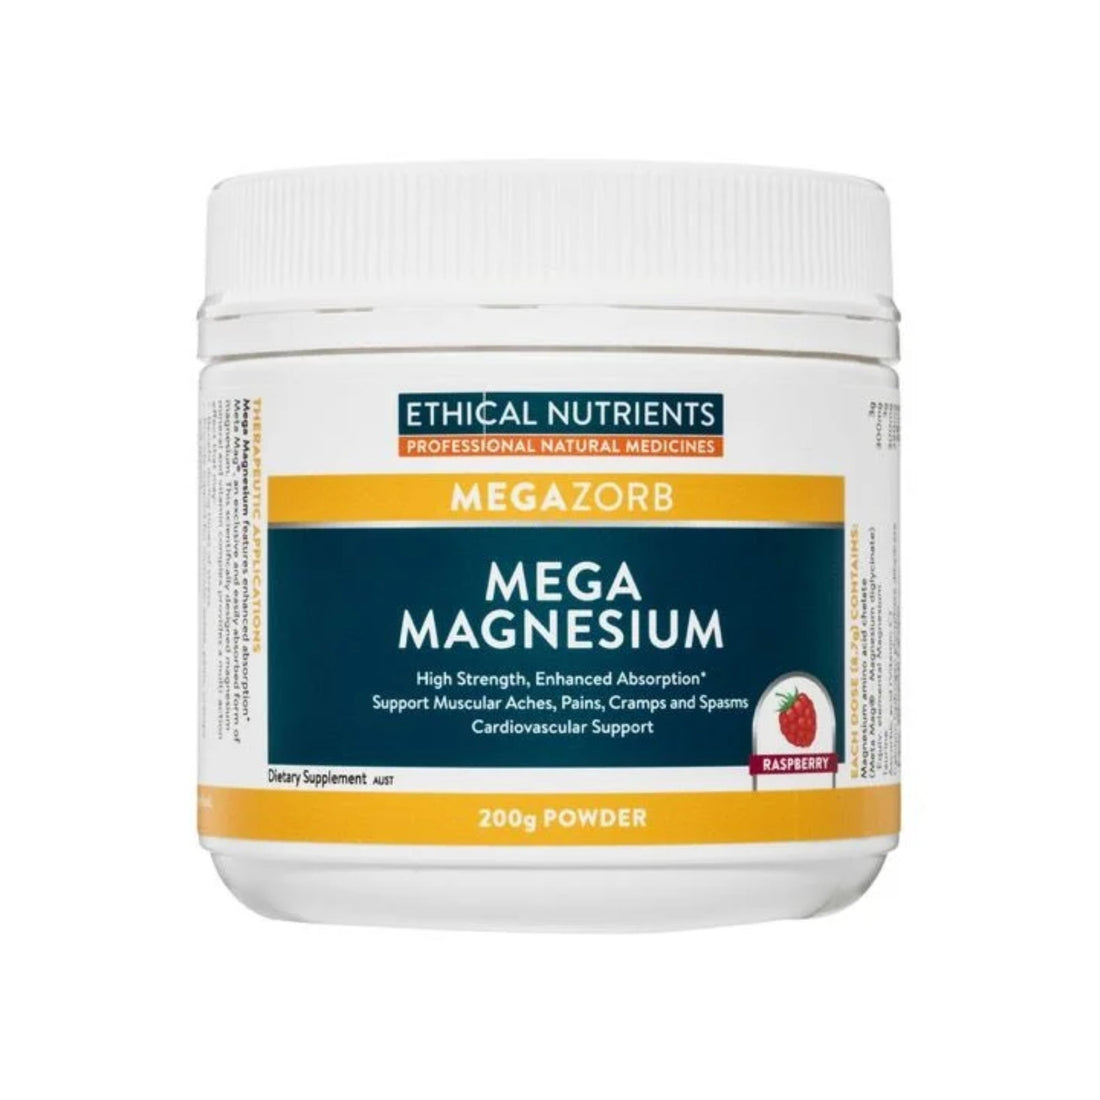 Ethical Nutrients Mega Magnesium Powder Vitamins and Health